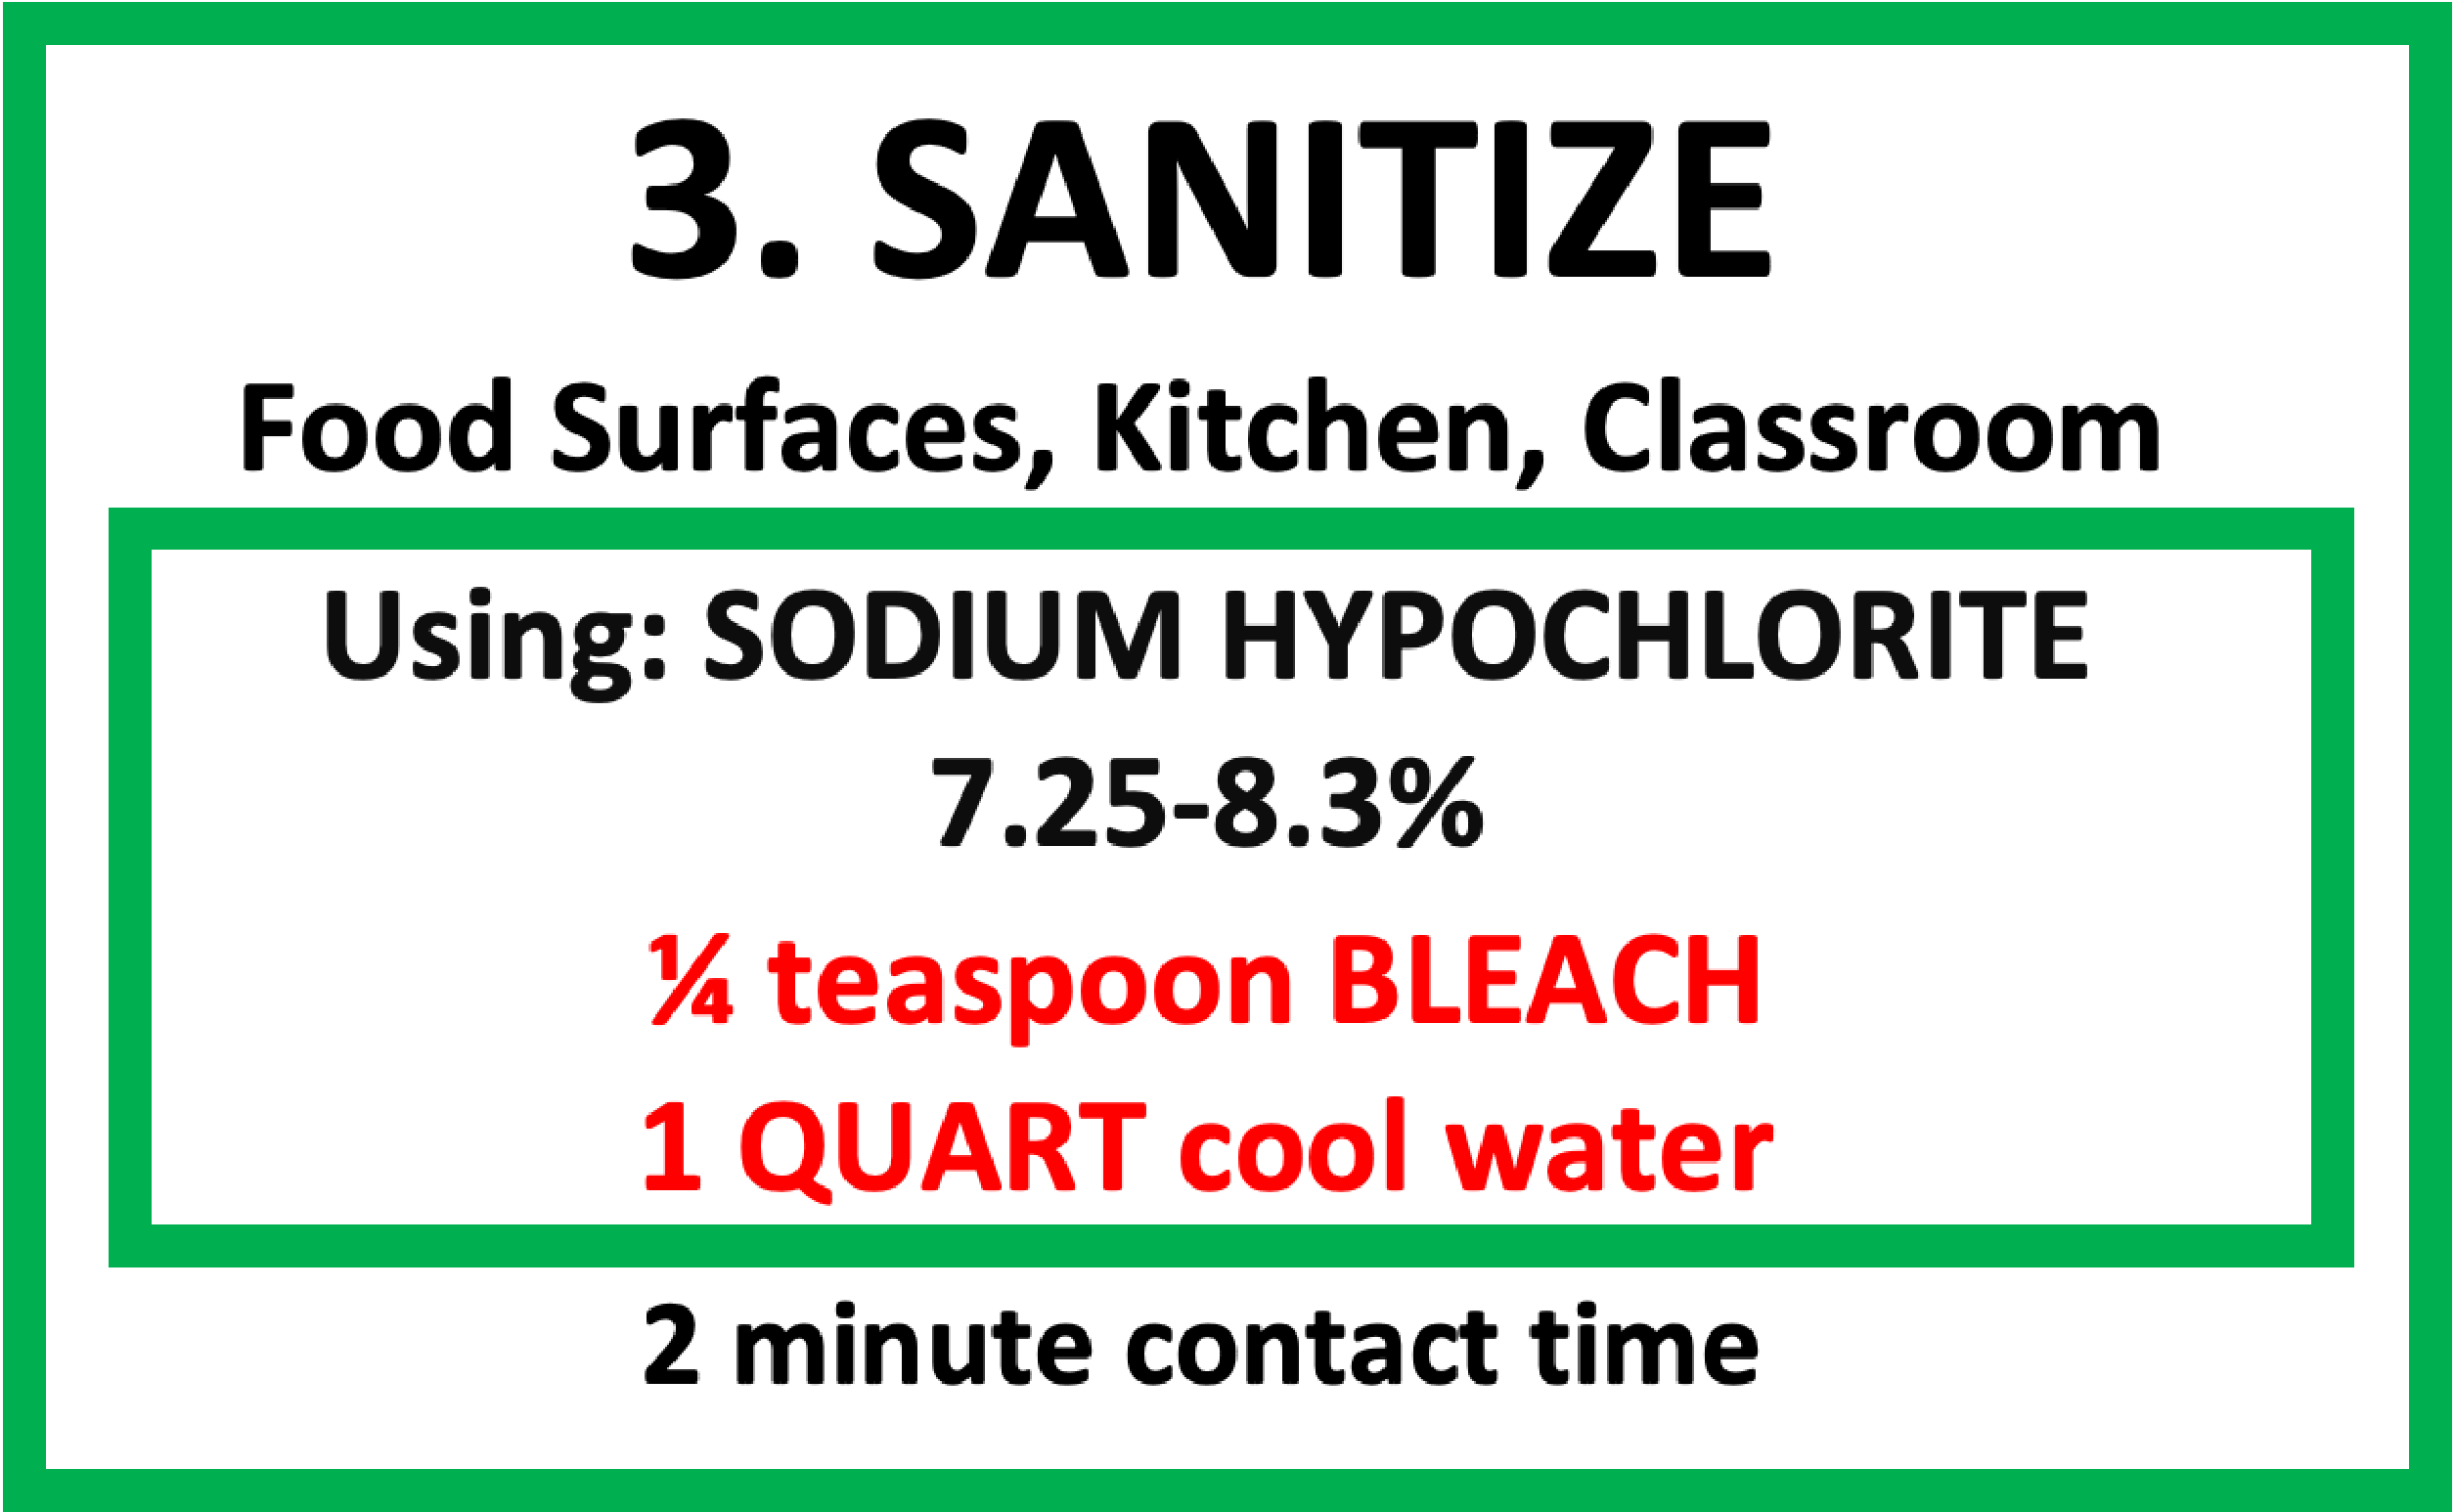 Sample of a sanitize label for 1 quart of solution